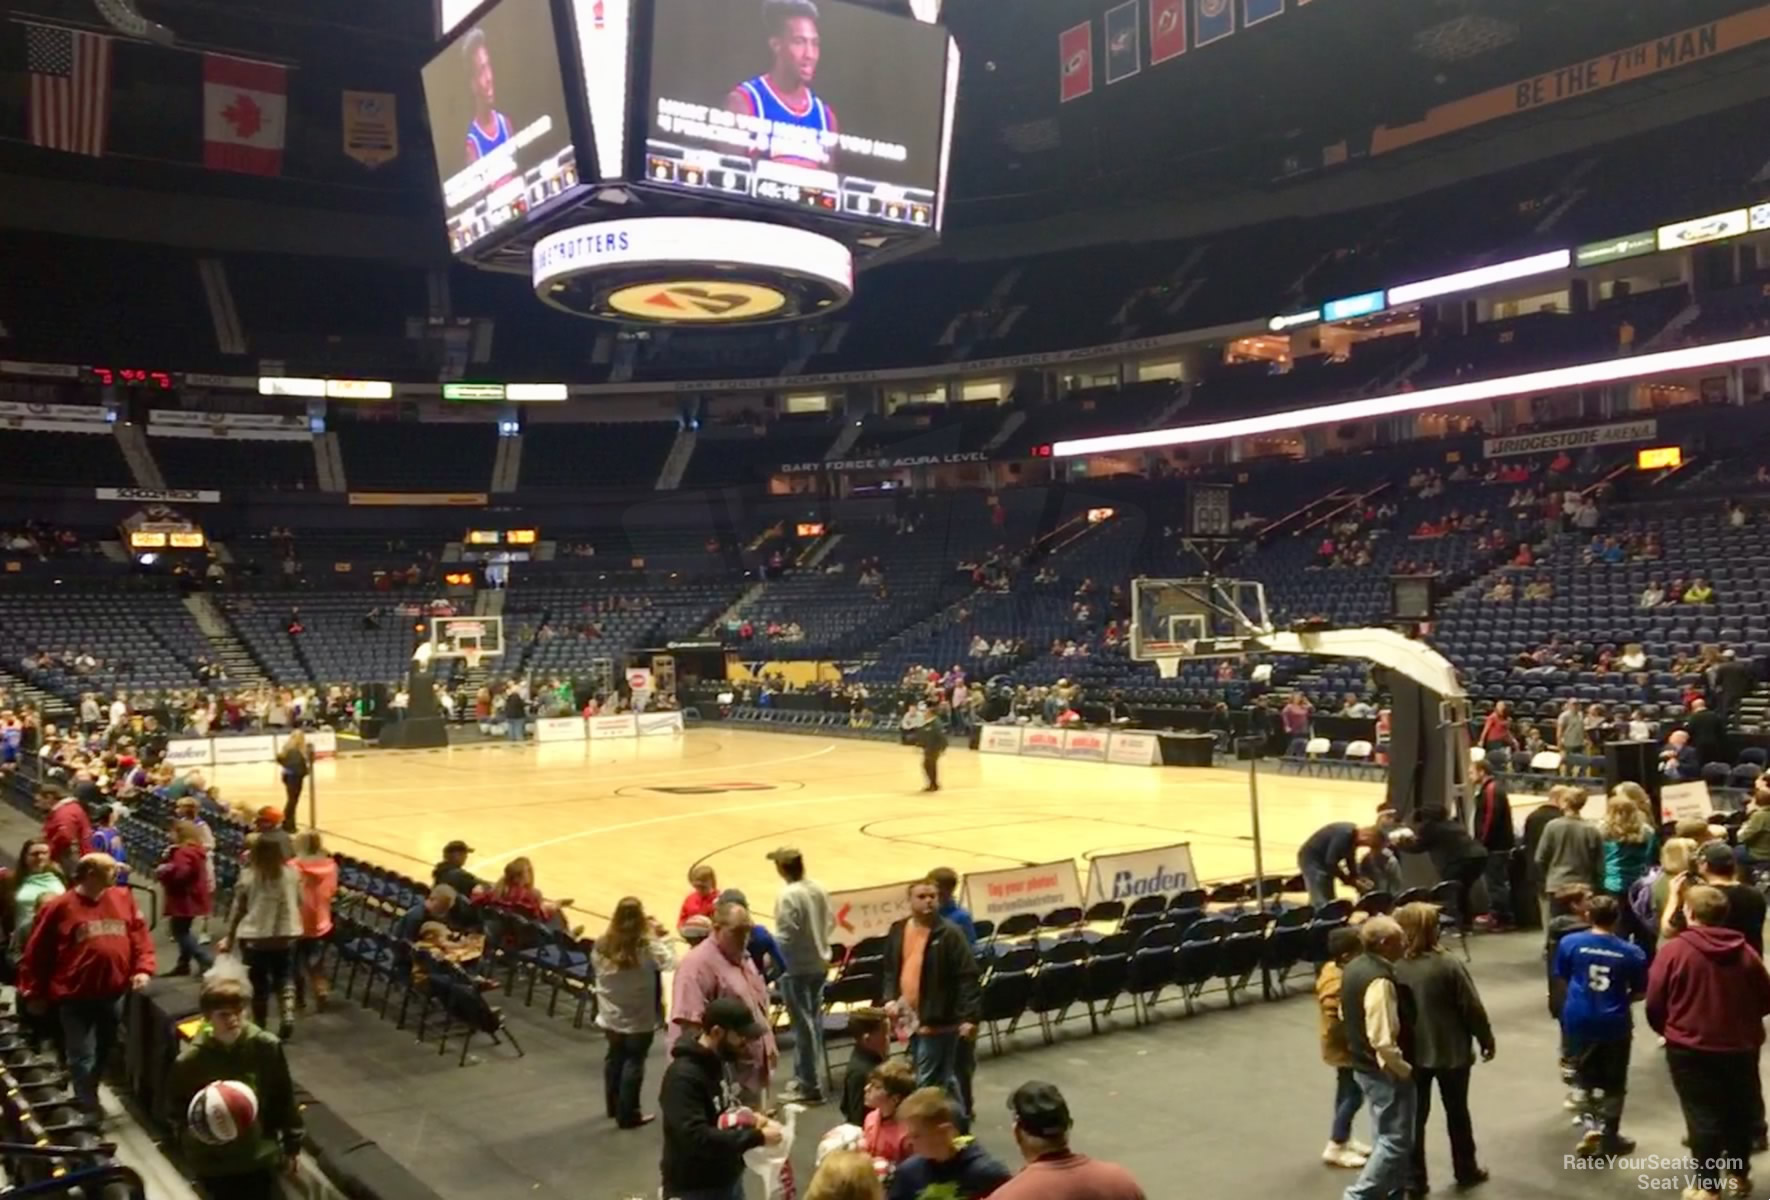 section 108, row gg seat view  for basketball - bridgestone arena